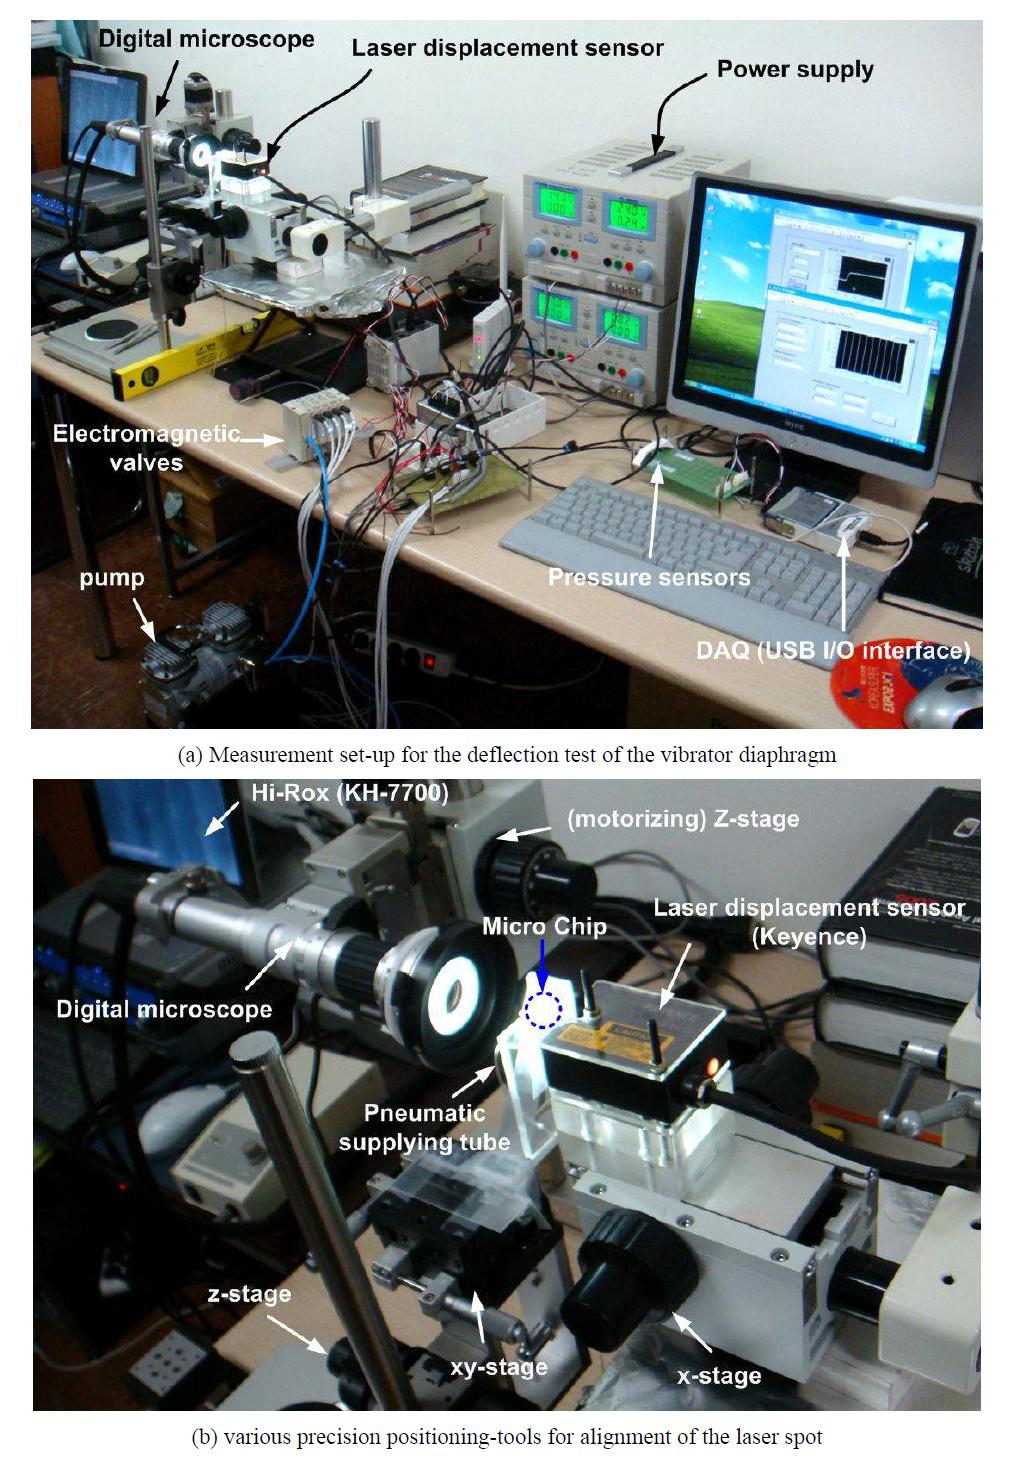 Photographs showing a measurement set-up for deflection test of vibrator diaphragm.